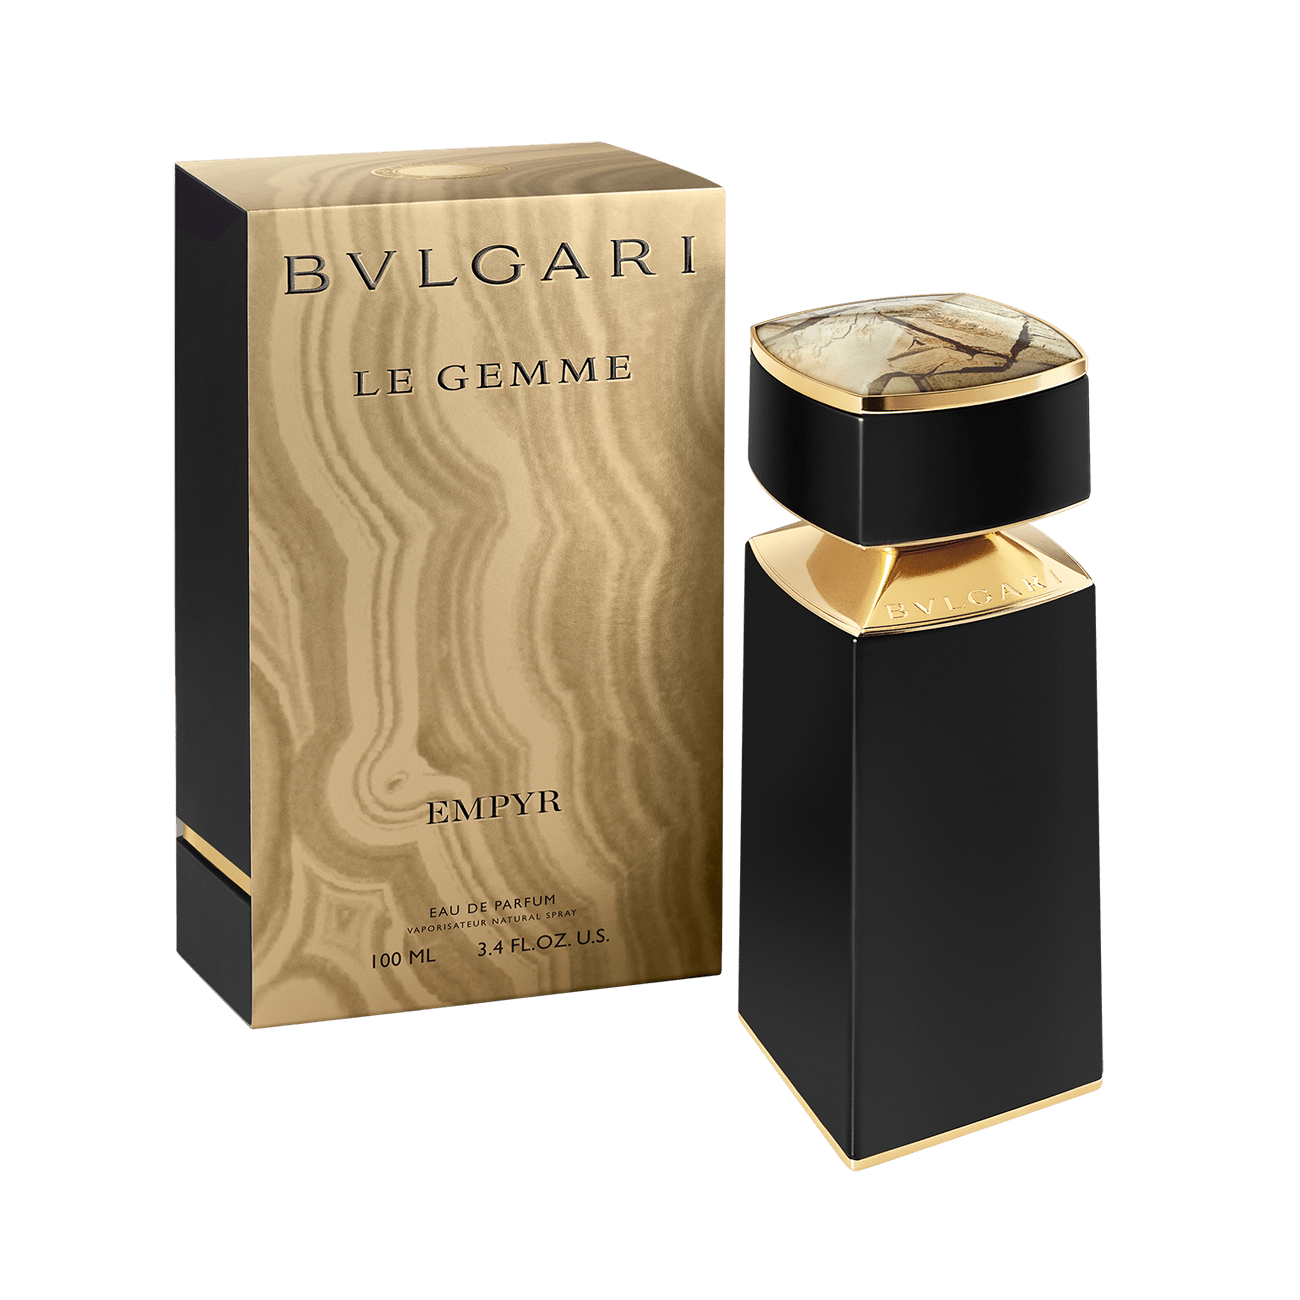 Bvlgari Le Gemme Empyr EDP | My Perfume Shop Australia